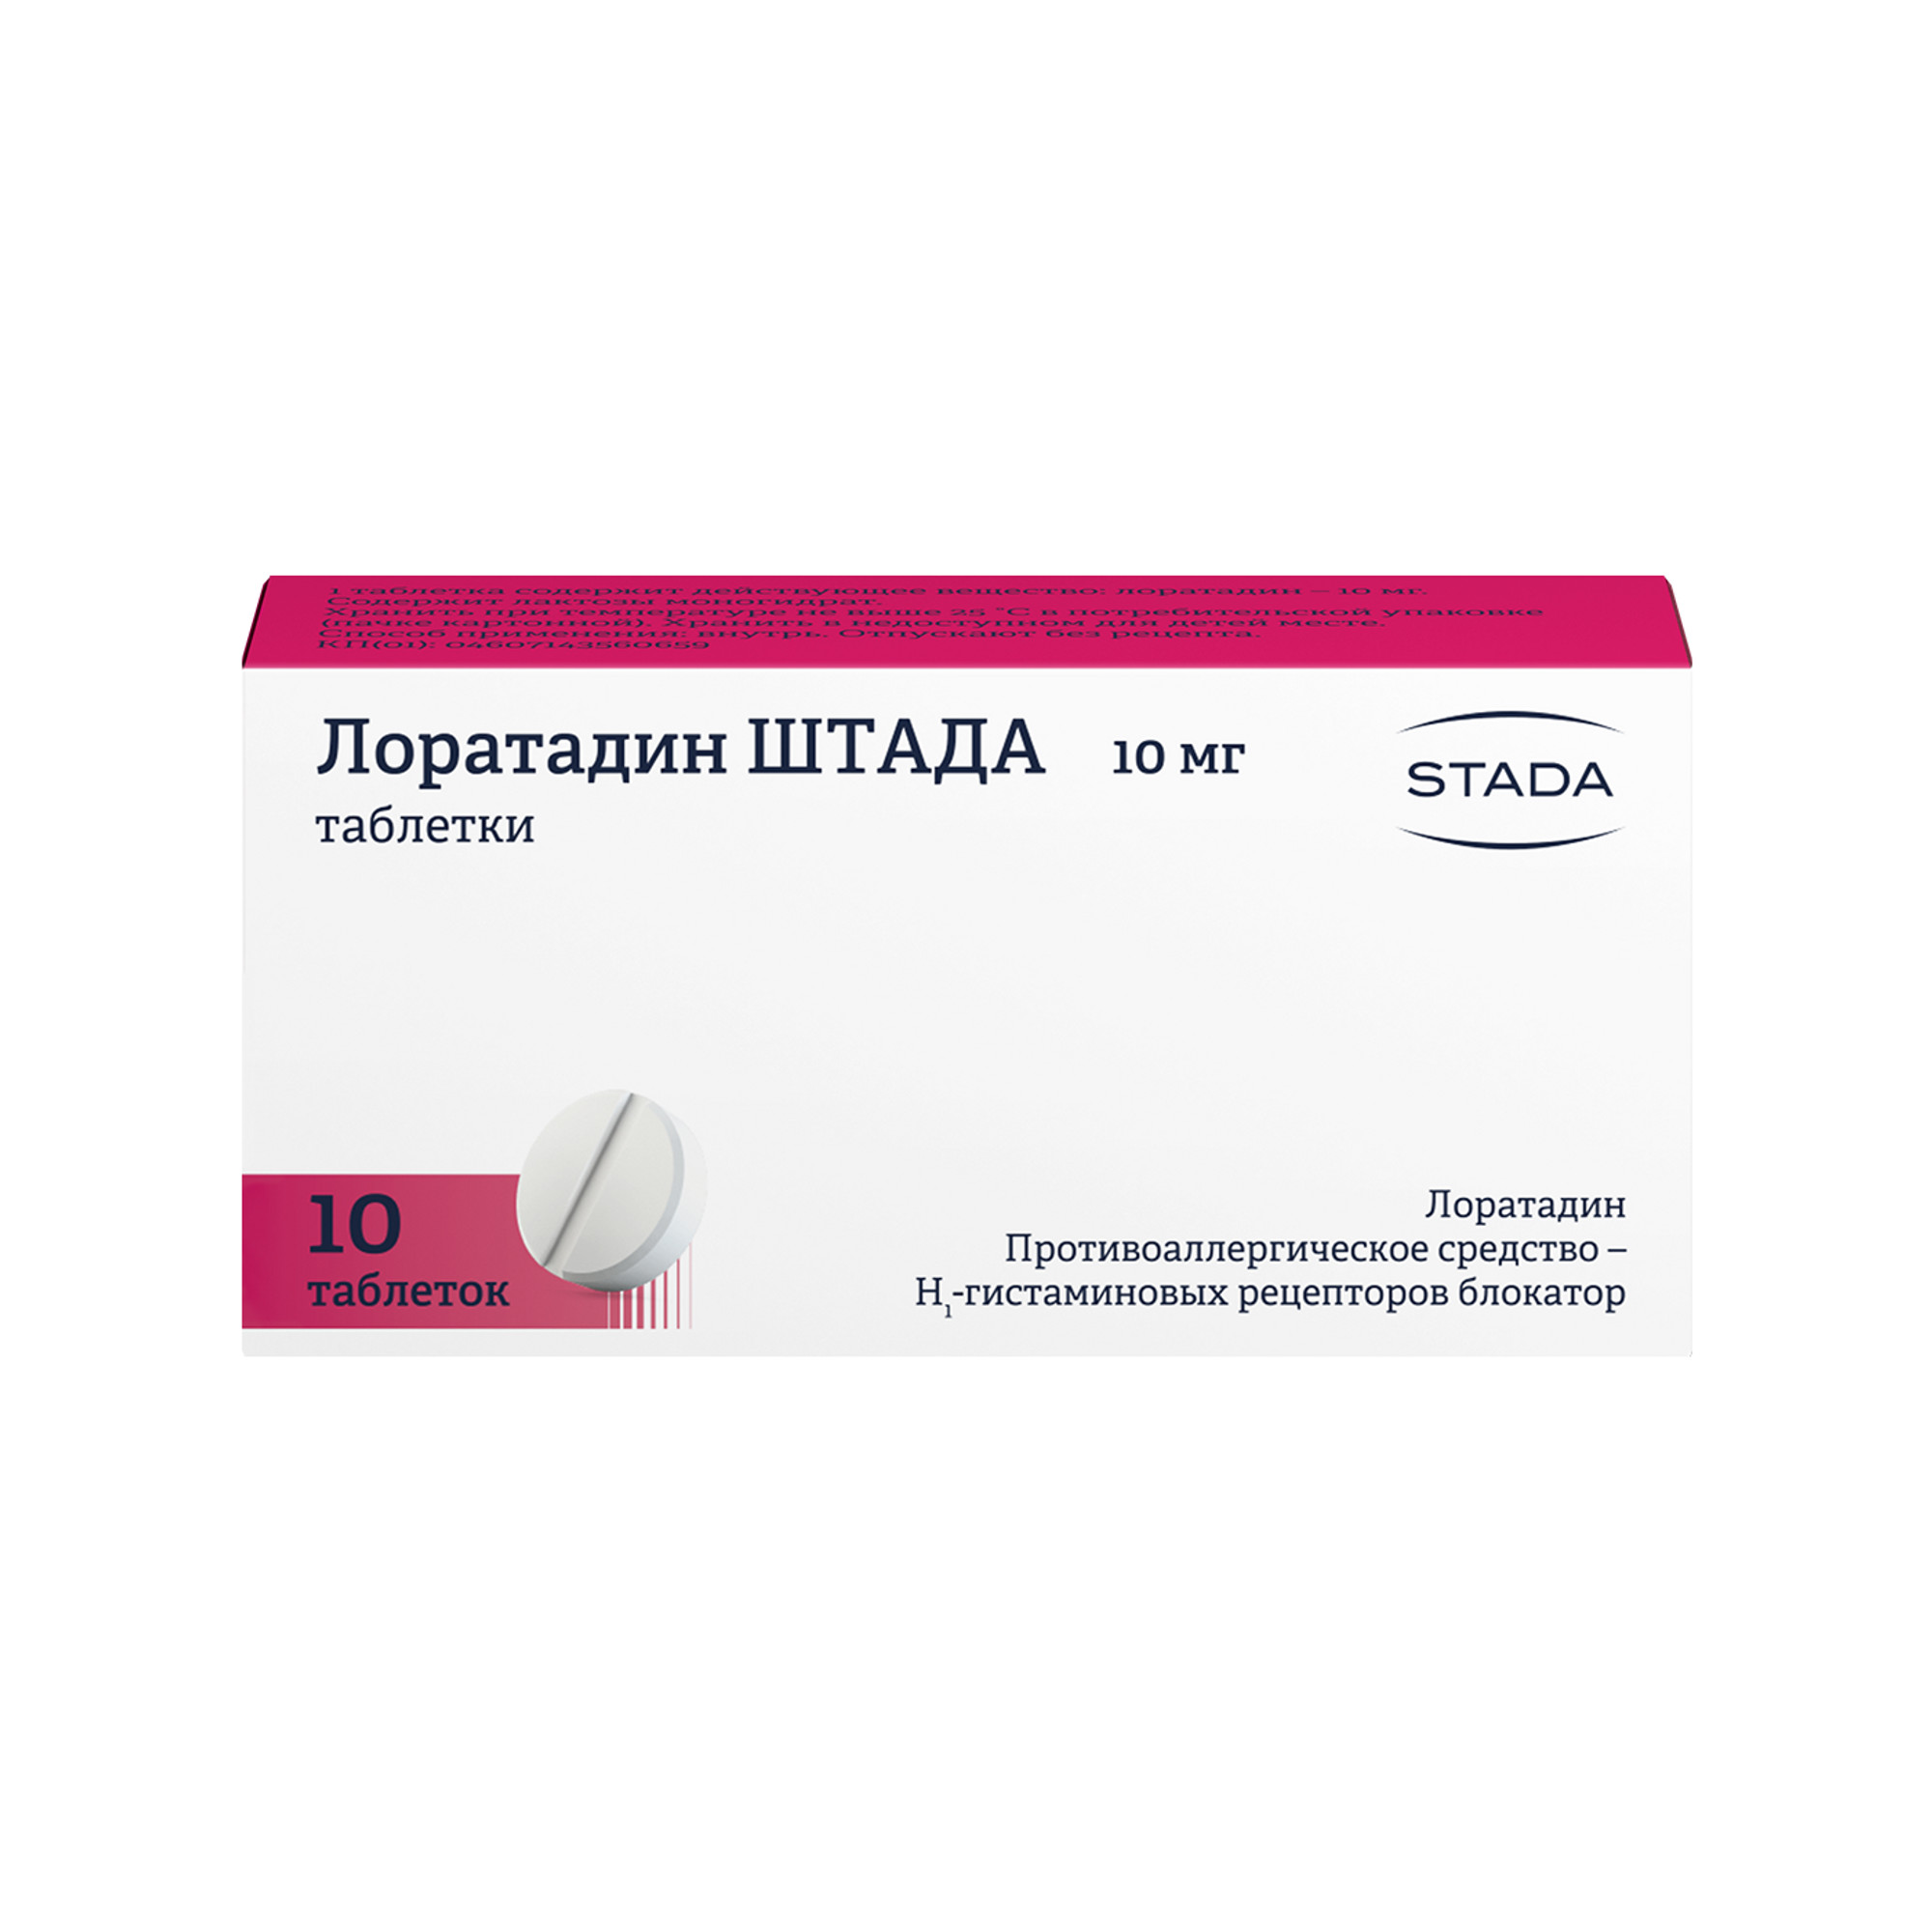 Лоратадин-Штада, таблетки 10 мг, 10 шт. лоратадин таблетки 10мг 30шт озон